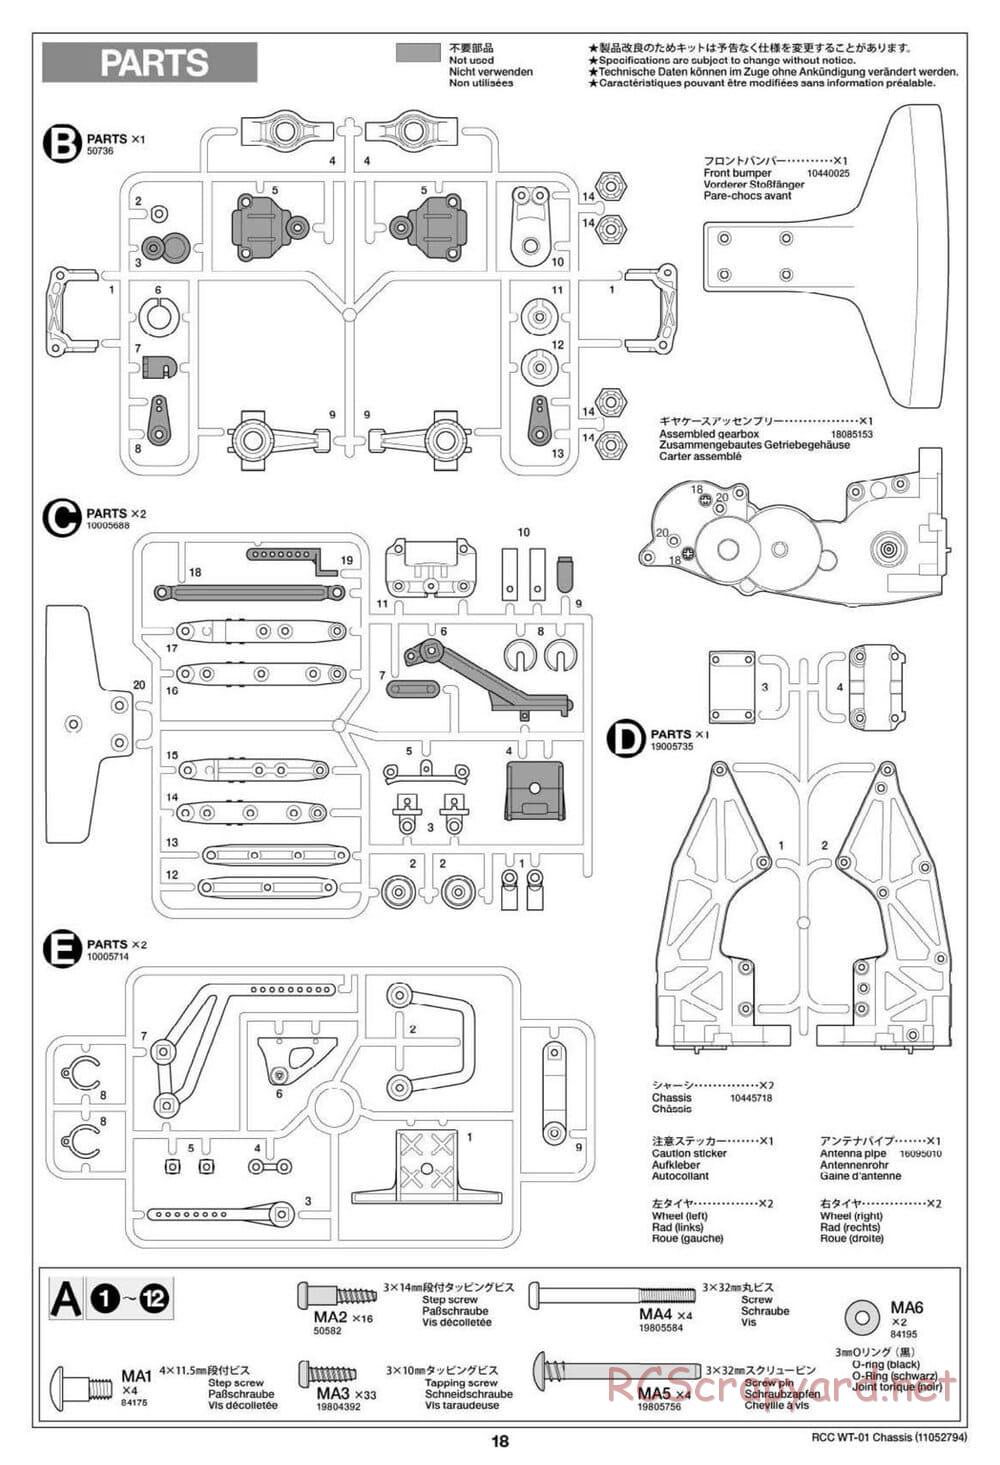 Tamiya - Mud Blaster II - WT-01 Chassis - Manual - Page 18